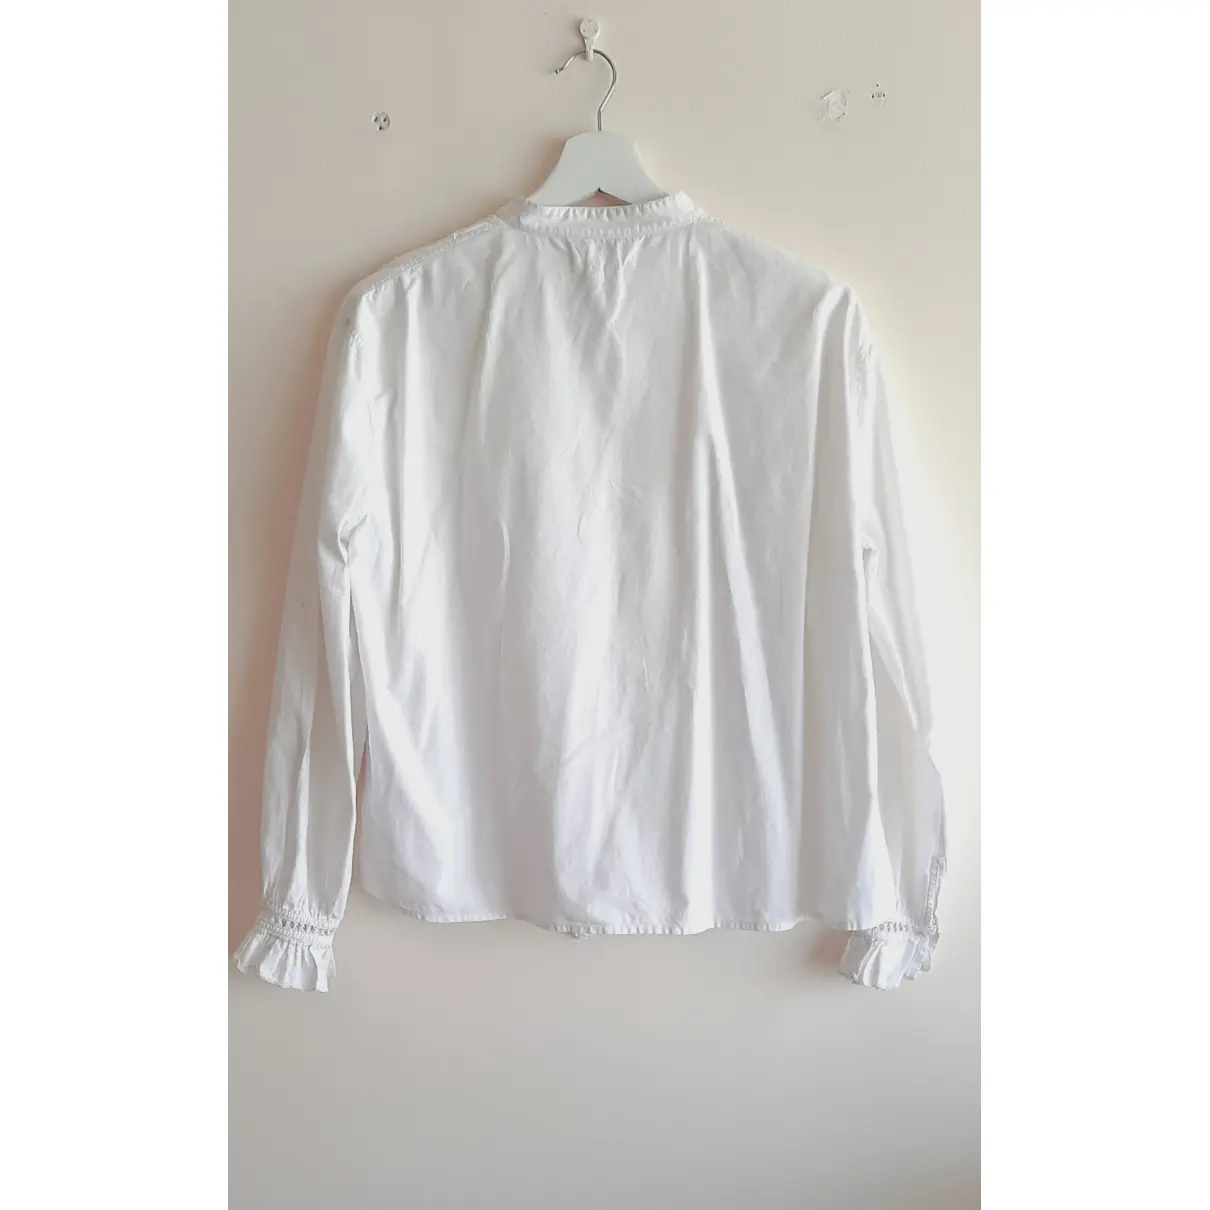 Buy Isabel Marant Etoile White Cotton Top online